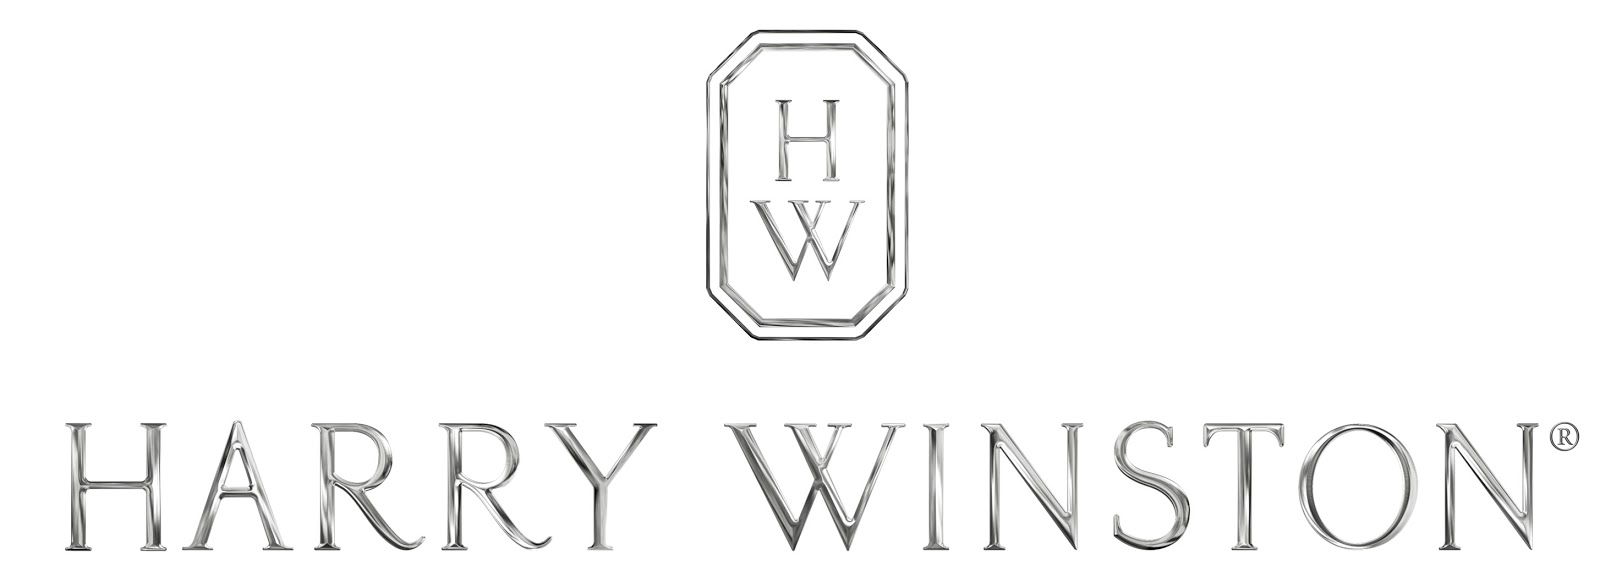 Harry winston Logos